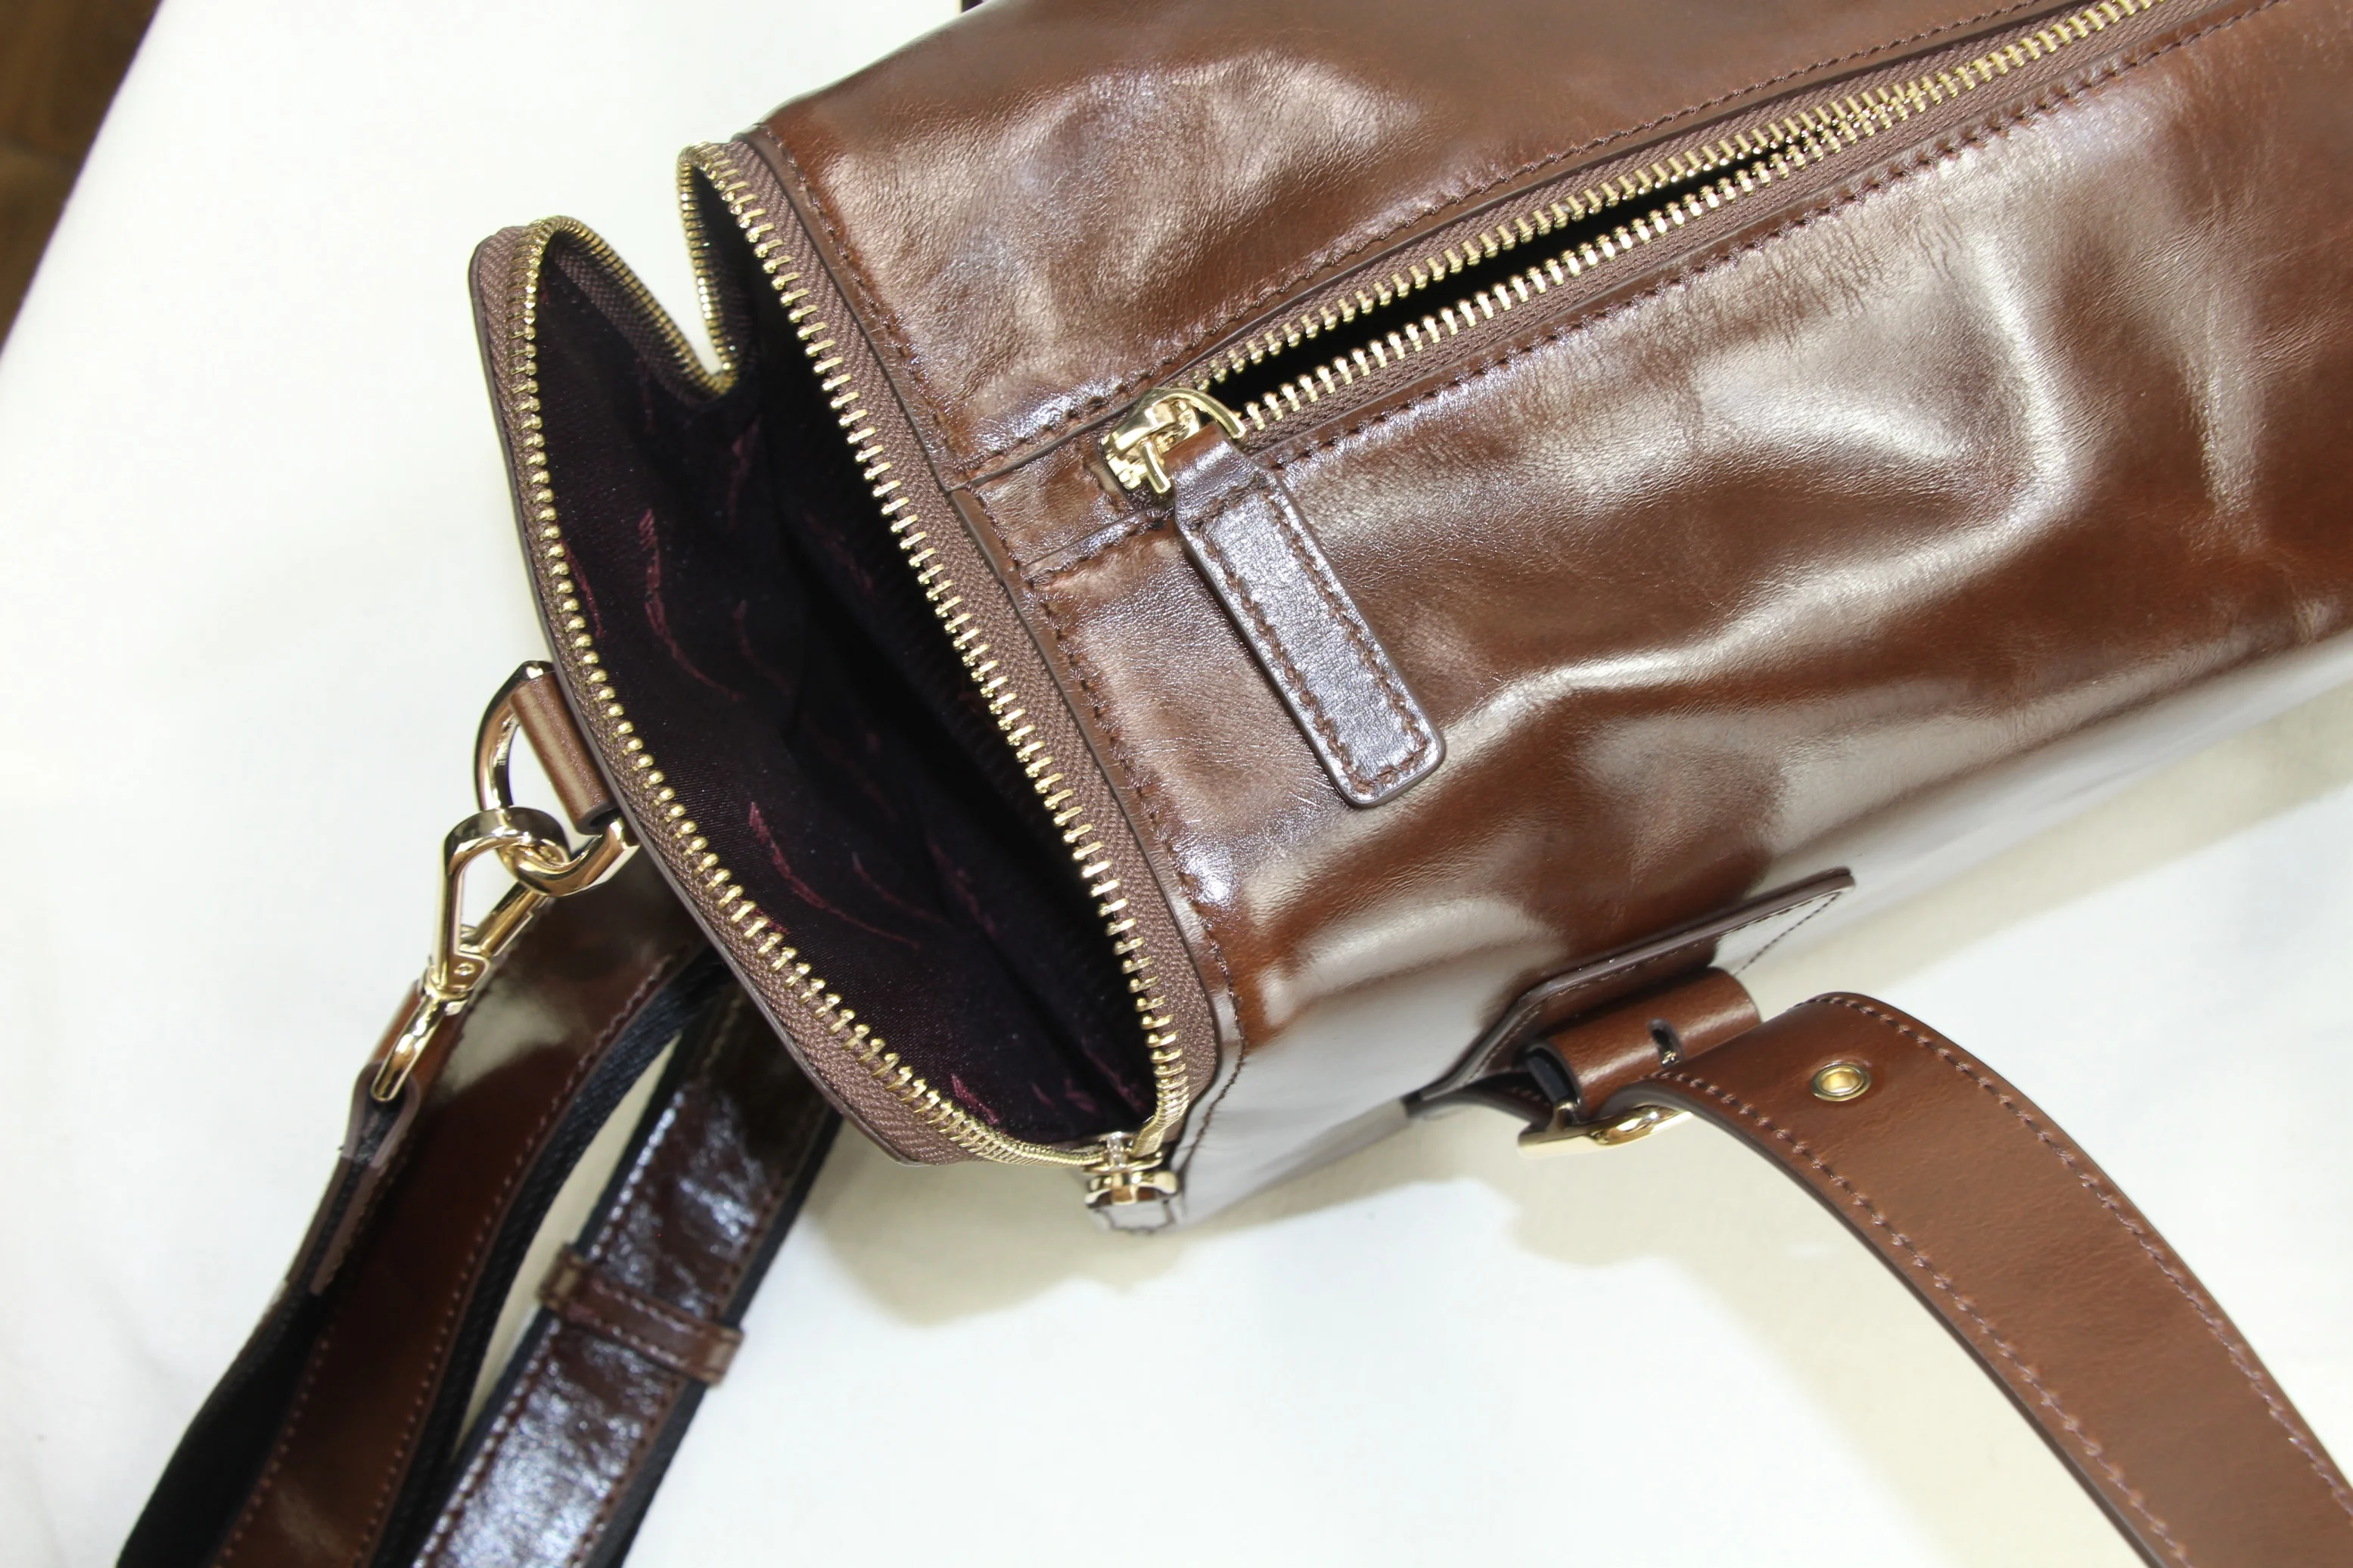 fashion design women handbag genuine leather bag